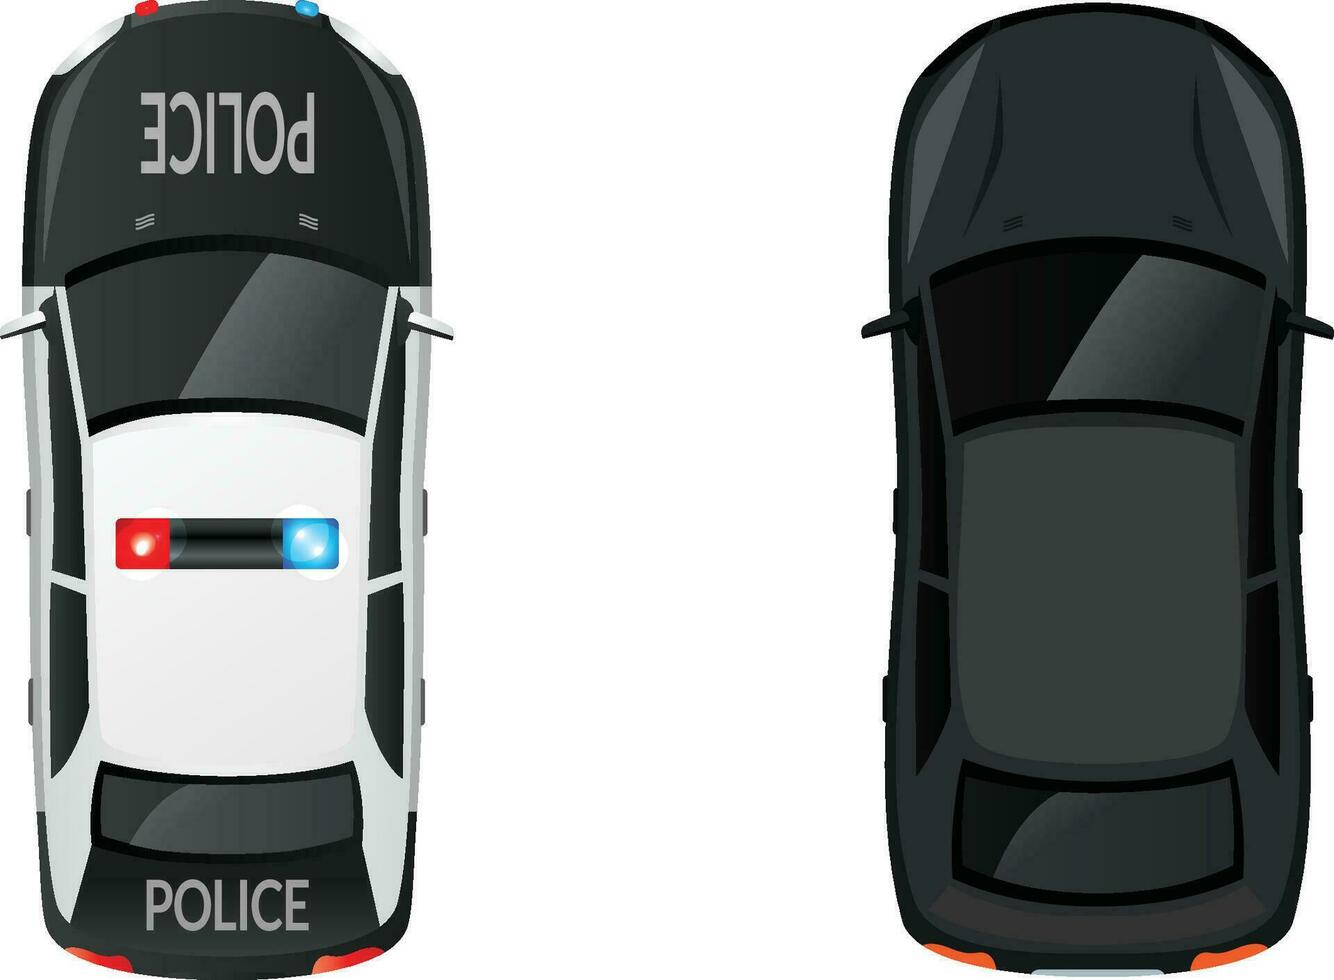 Politie auto semi vlak rgb kleur Aan wit achtergrond vector